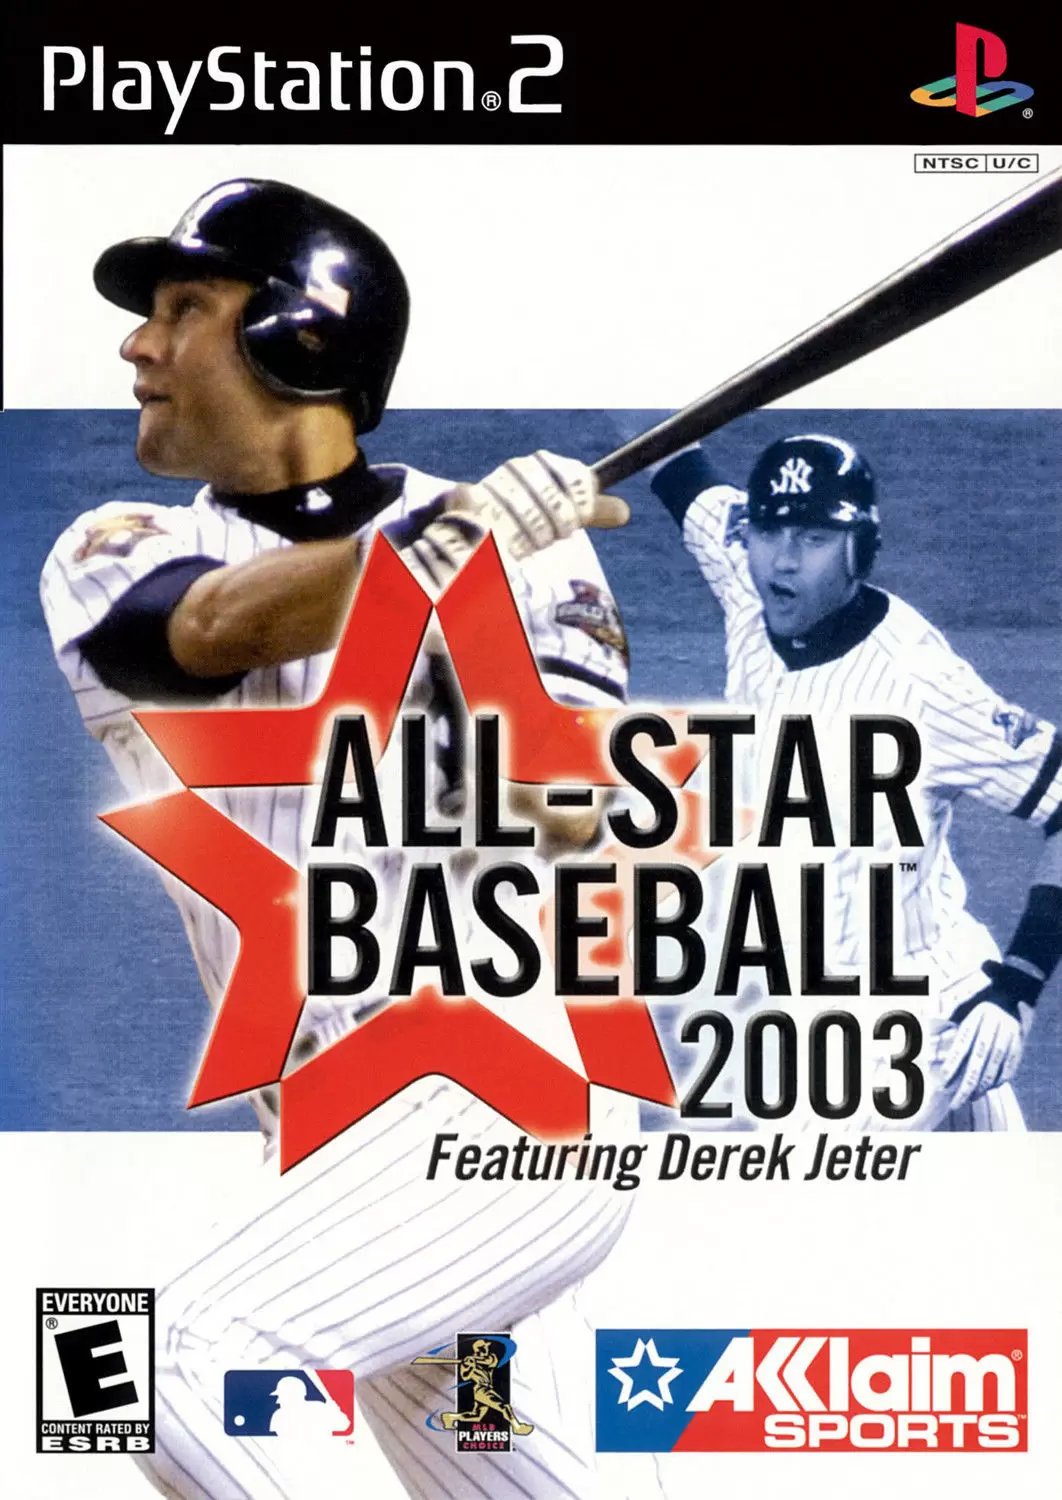 PS2 Games - All-Star Baseball 2003